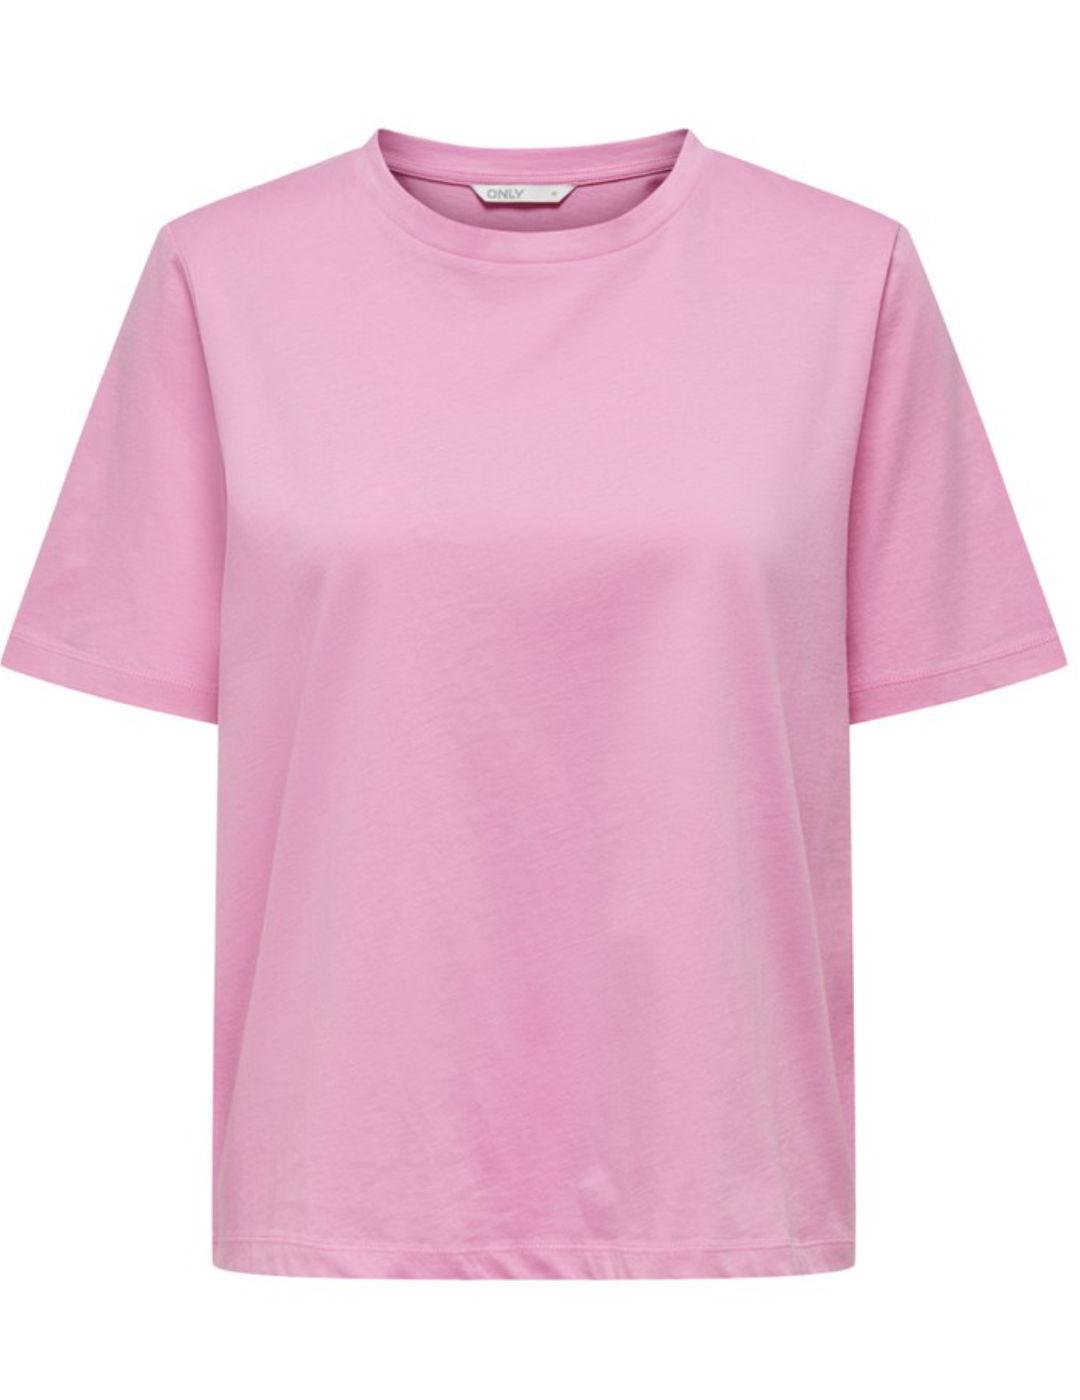 Camiseta Only rosa manga corta para mujer